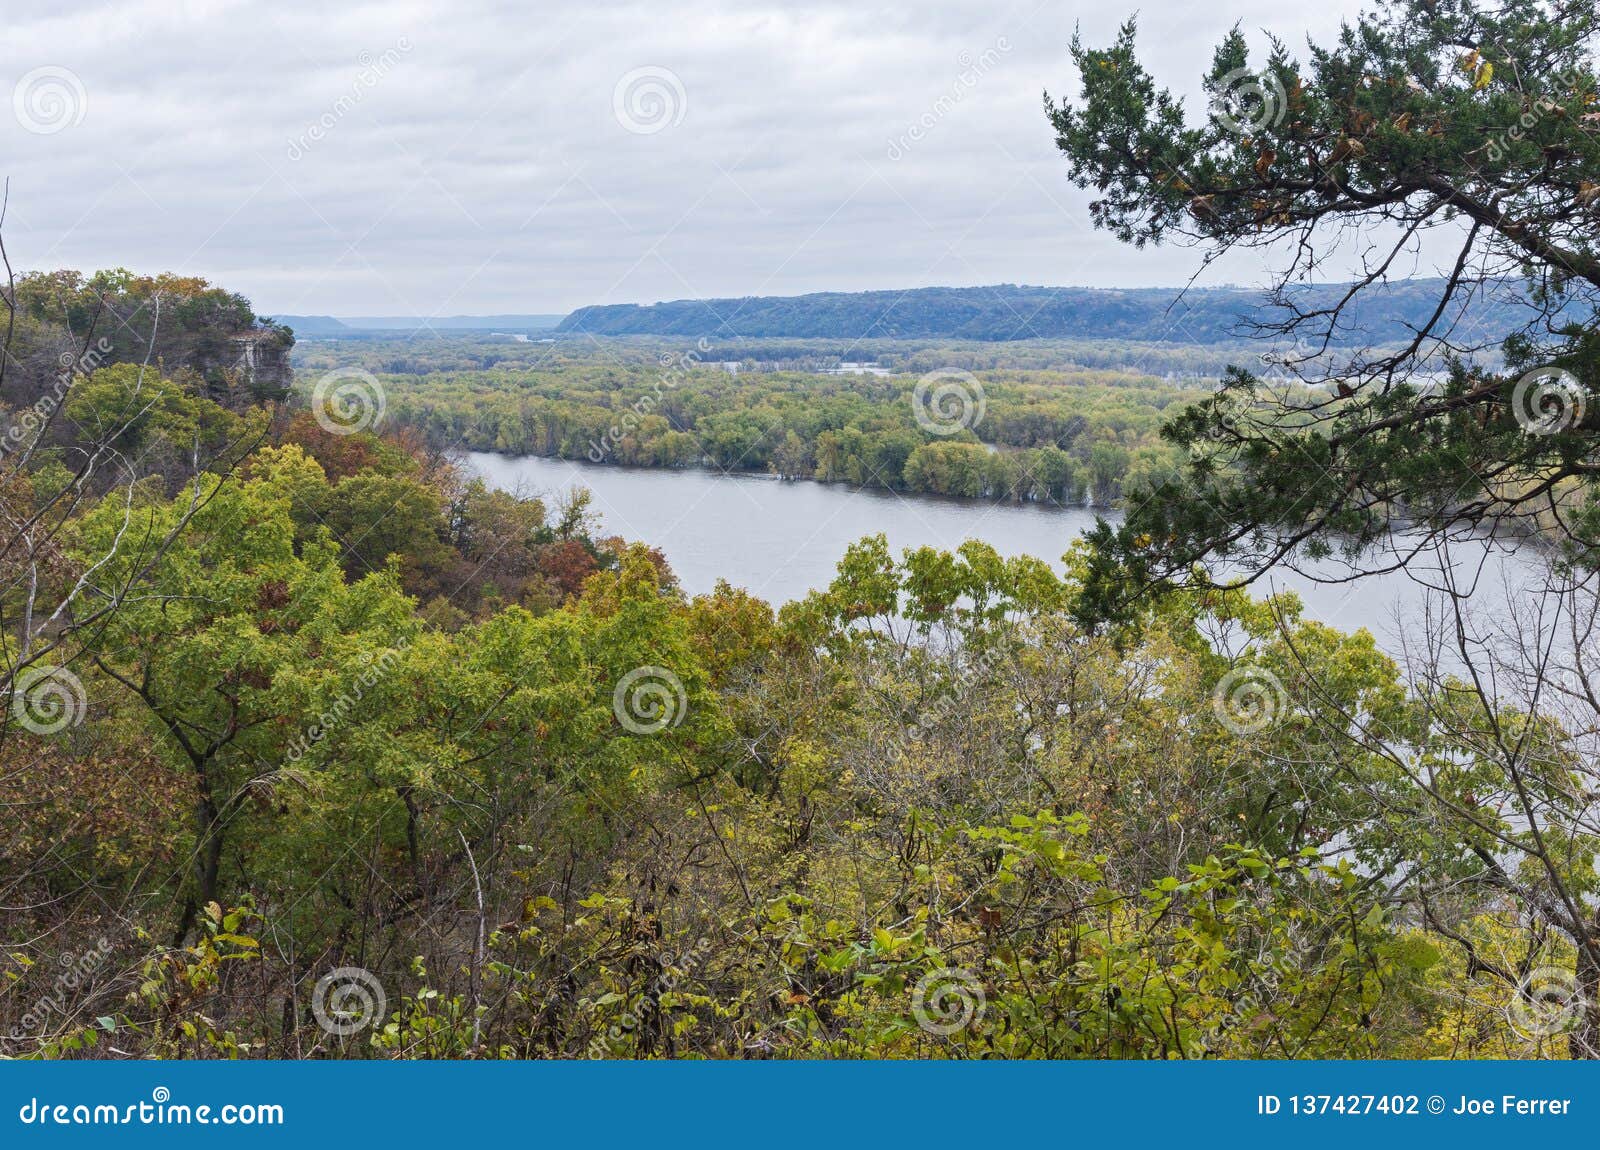 mississippi river overlook at effigy mounds